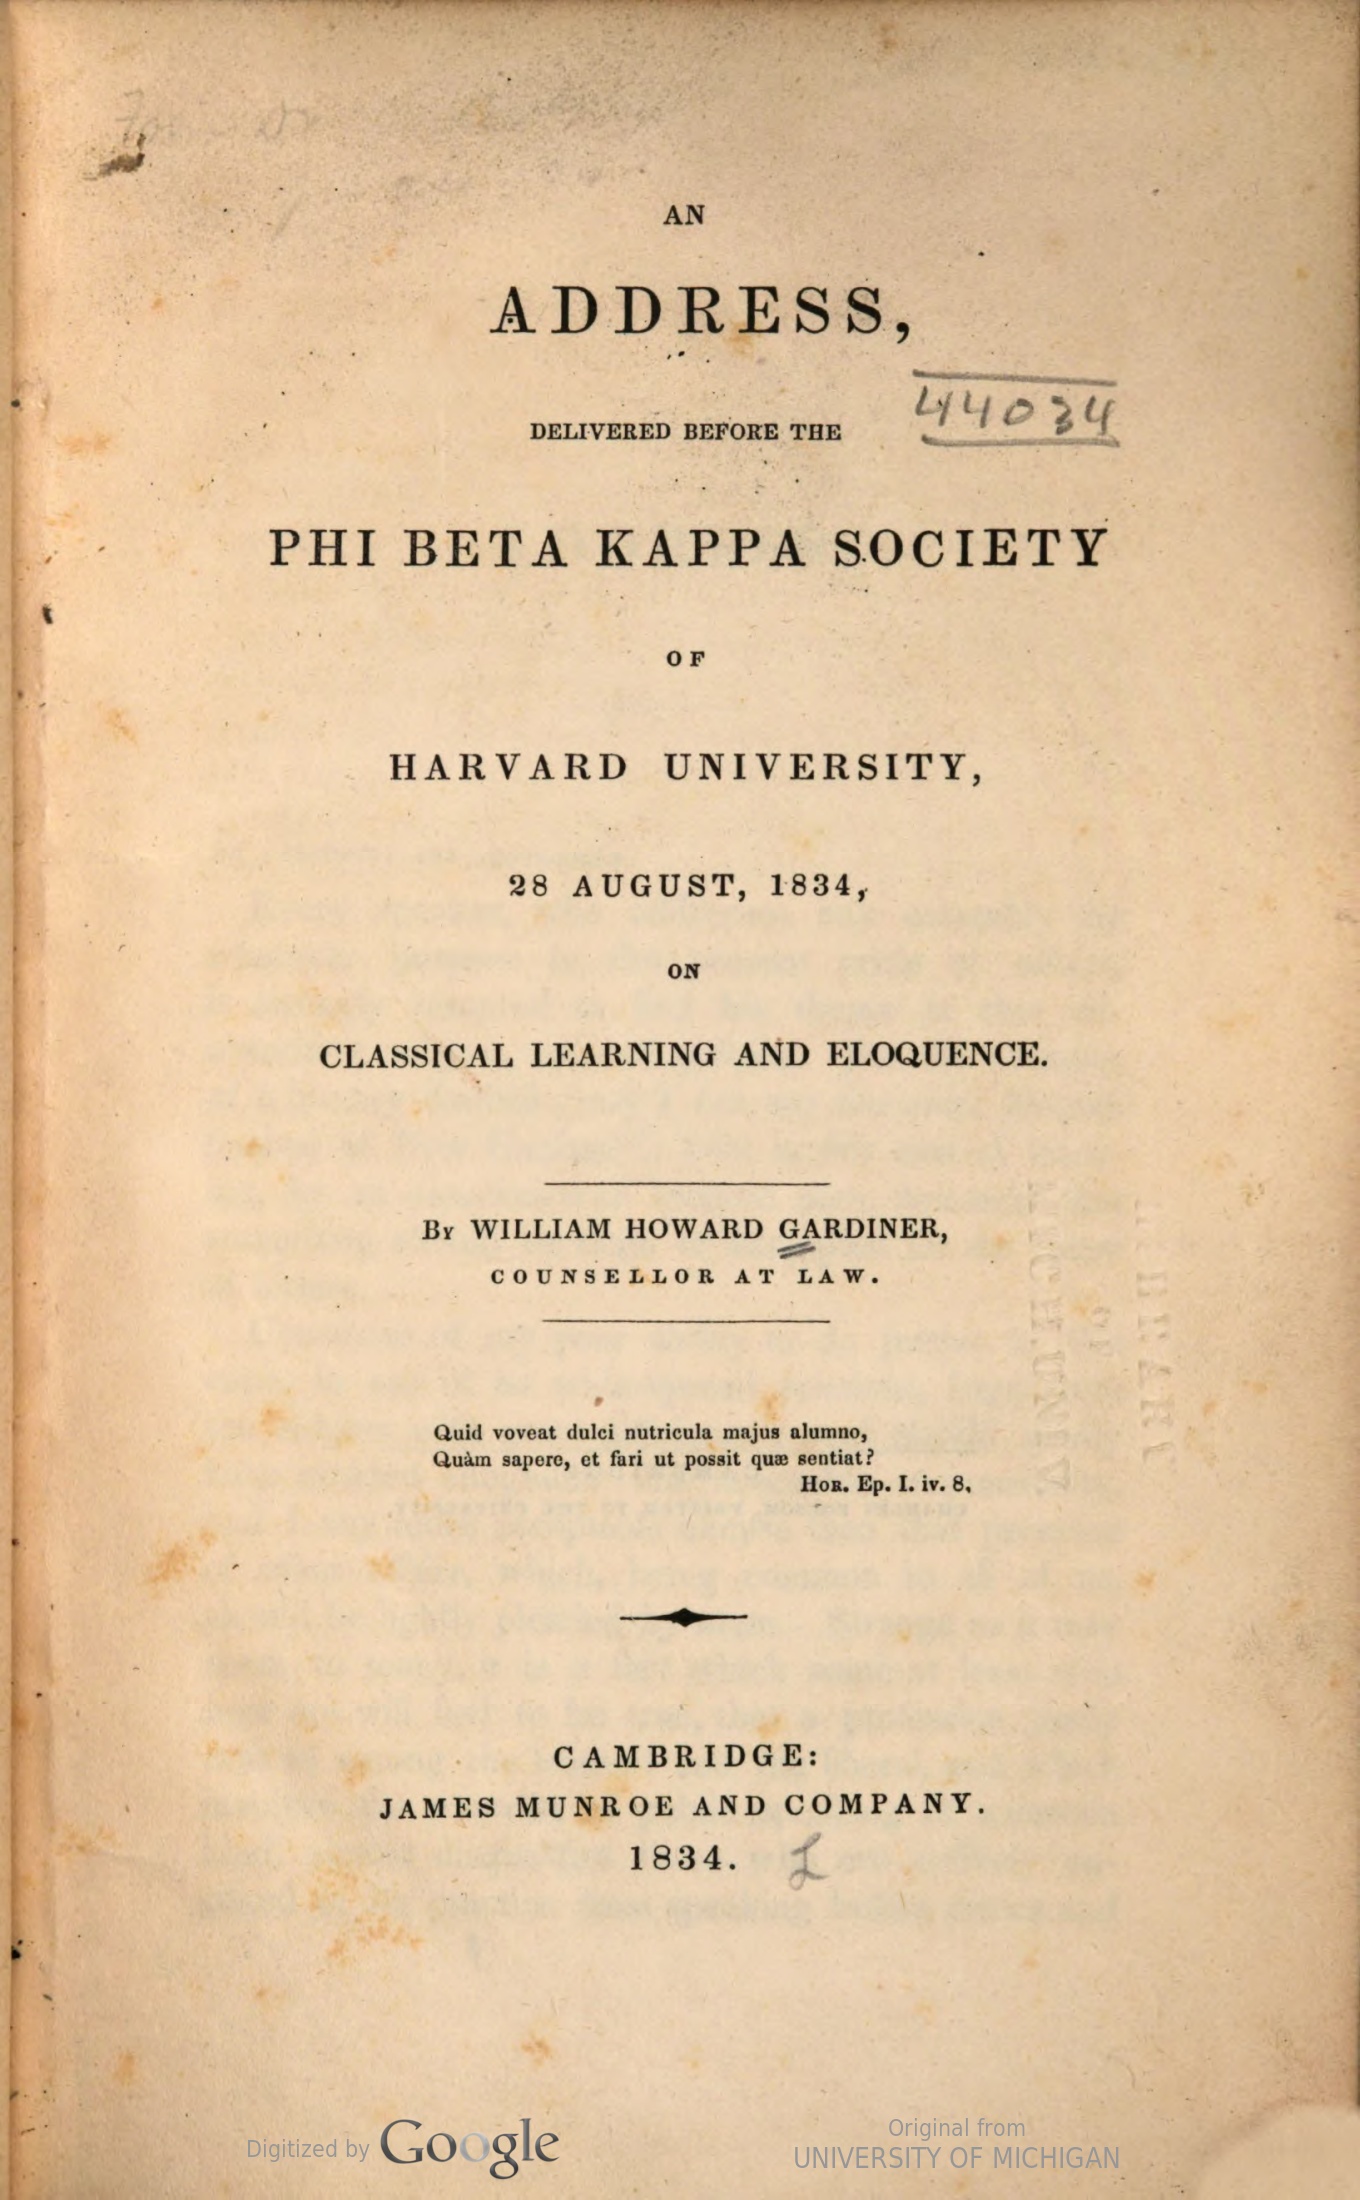 An address, delivered before the Phi Beta Kappa Society of Harvard University, Essay